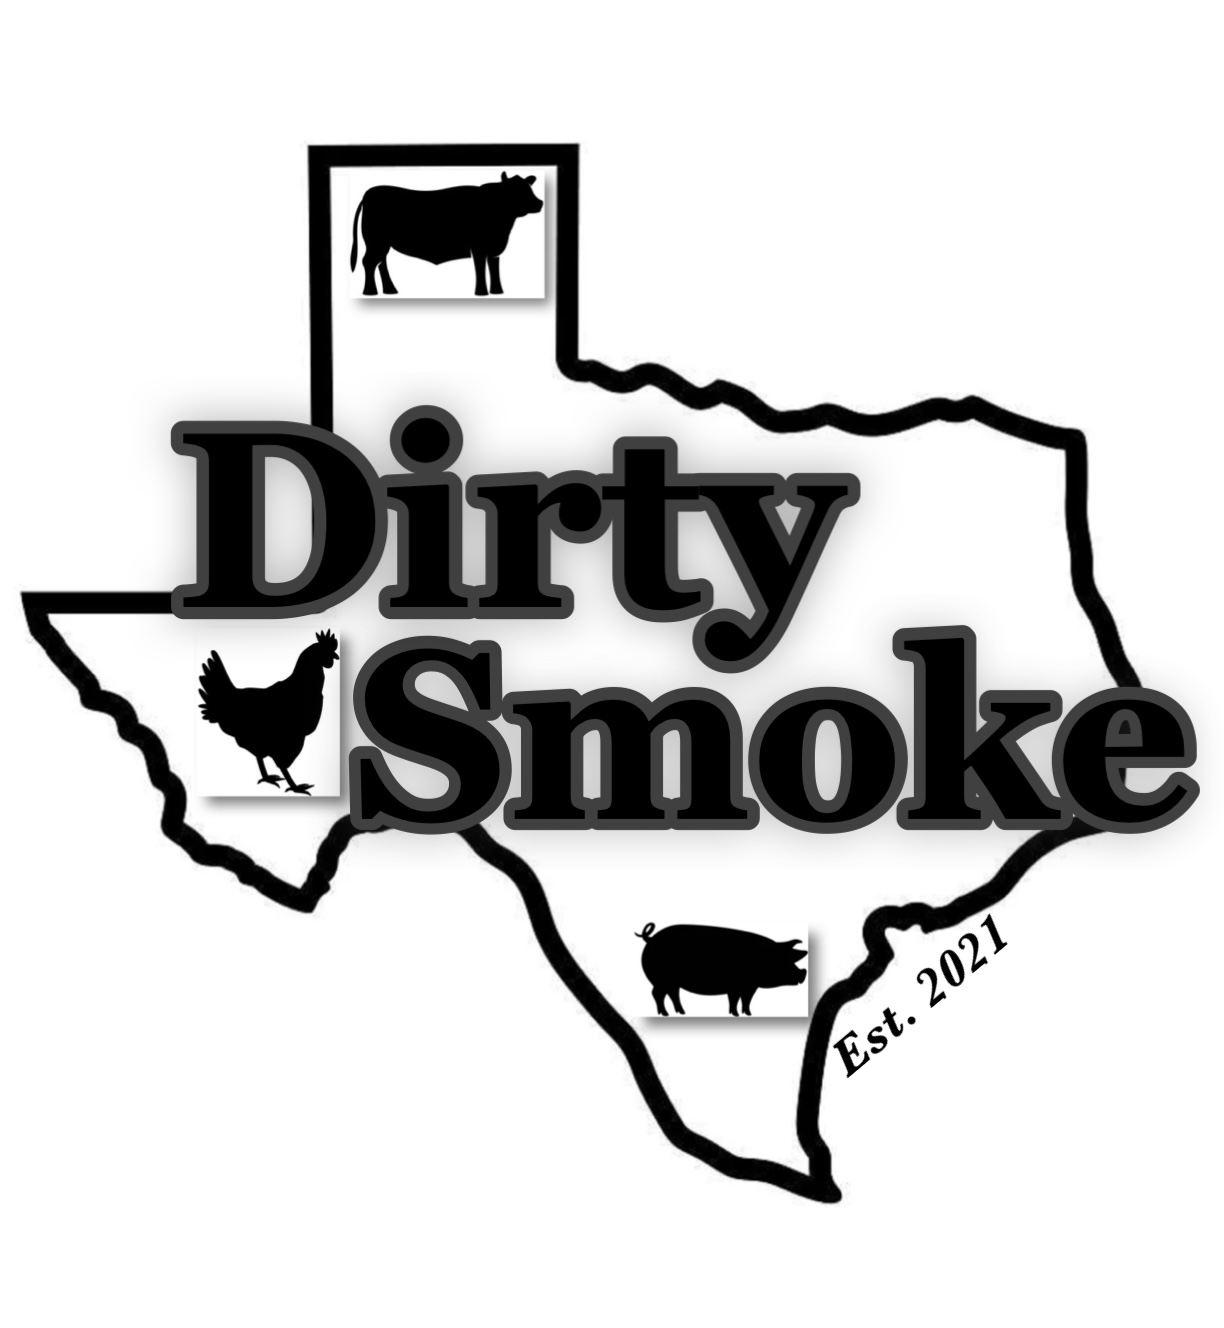 Dirty Smoke